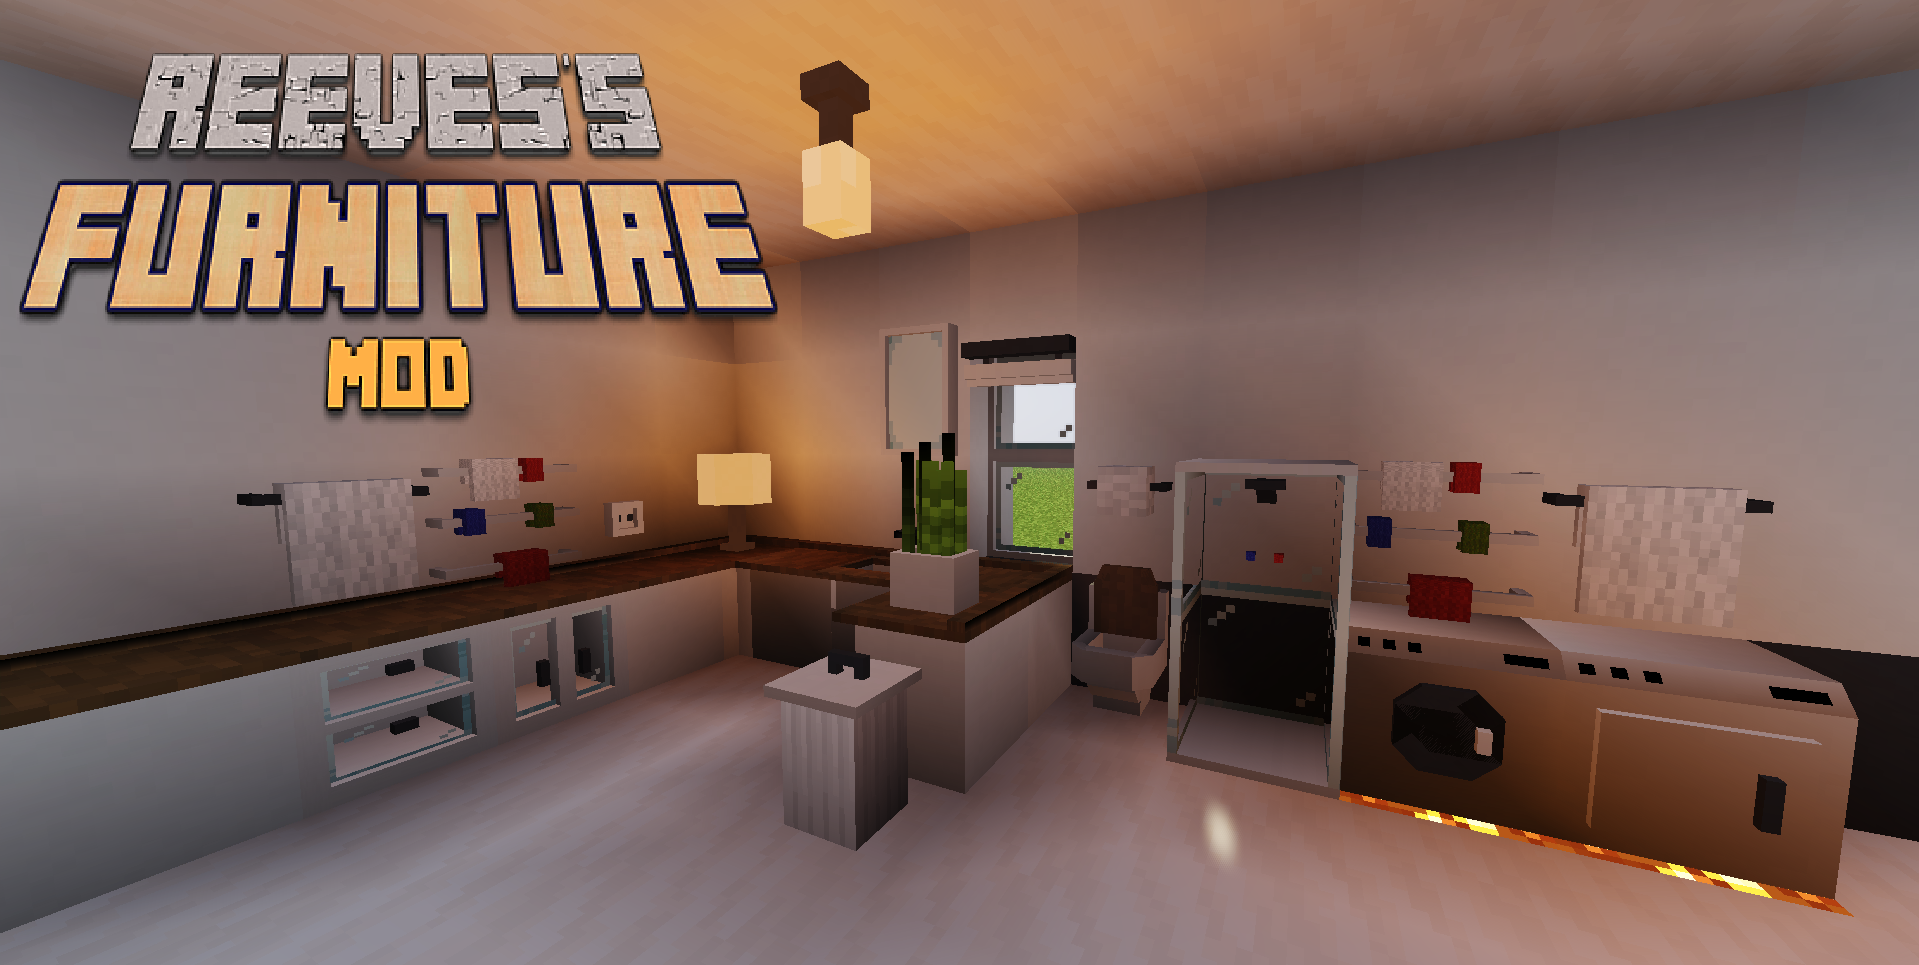 Моды на мебель сборка. Minecraft 1.12.2 Mod мебель. Reeves Furniture Mod 1.12.2. Reeves's Furniture 1.18.2. Мод на красивую мебель.